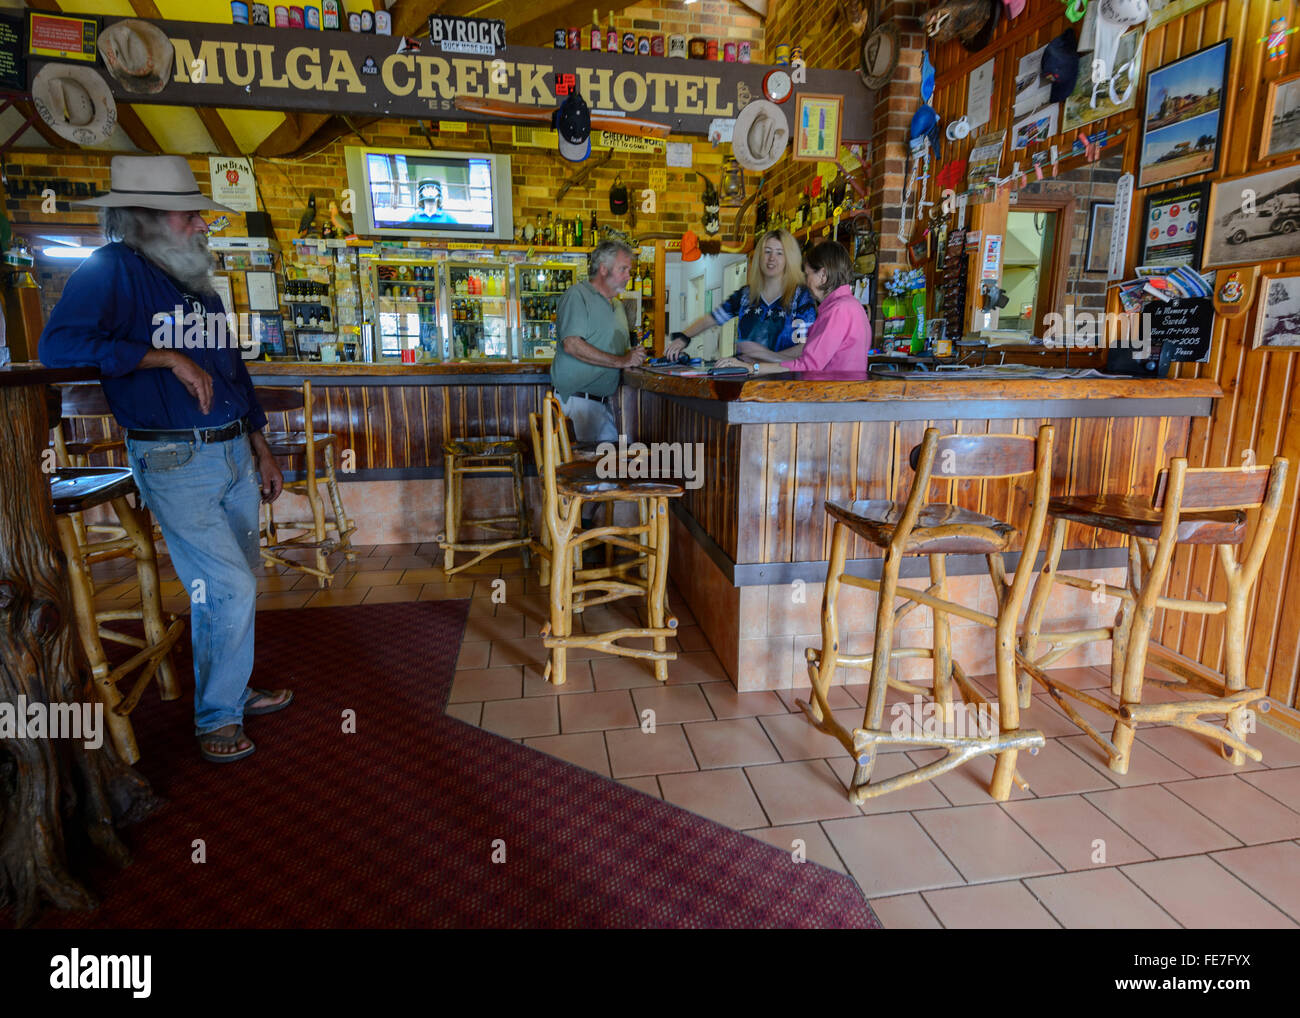 The iconic bush pub Mulga Creek Hotel, New South Wales, Australia Stock Photo